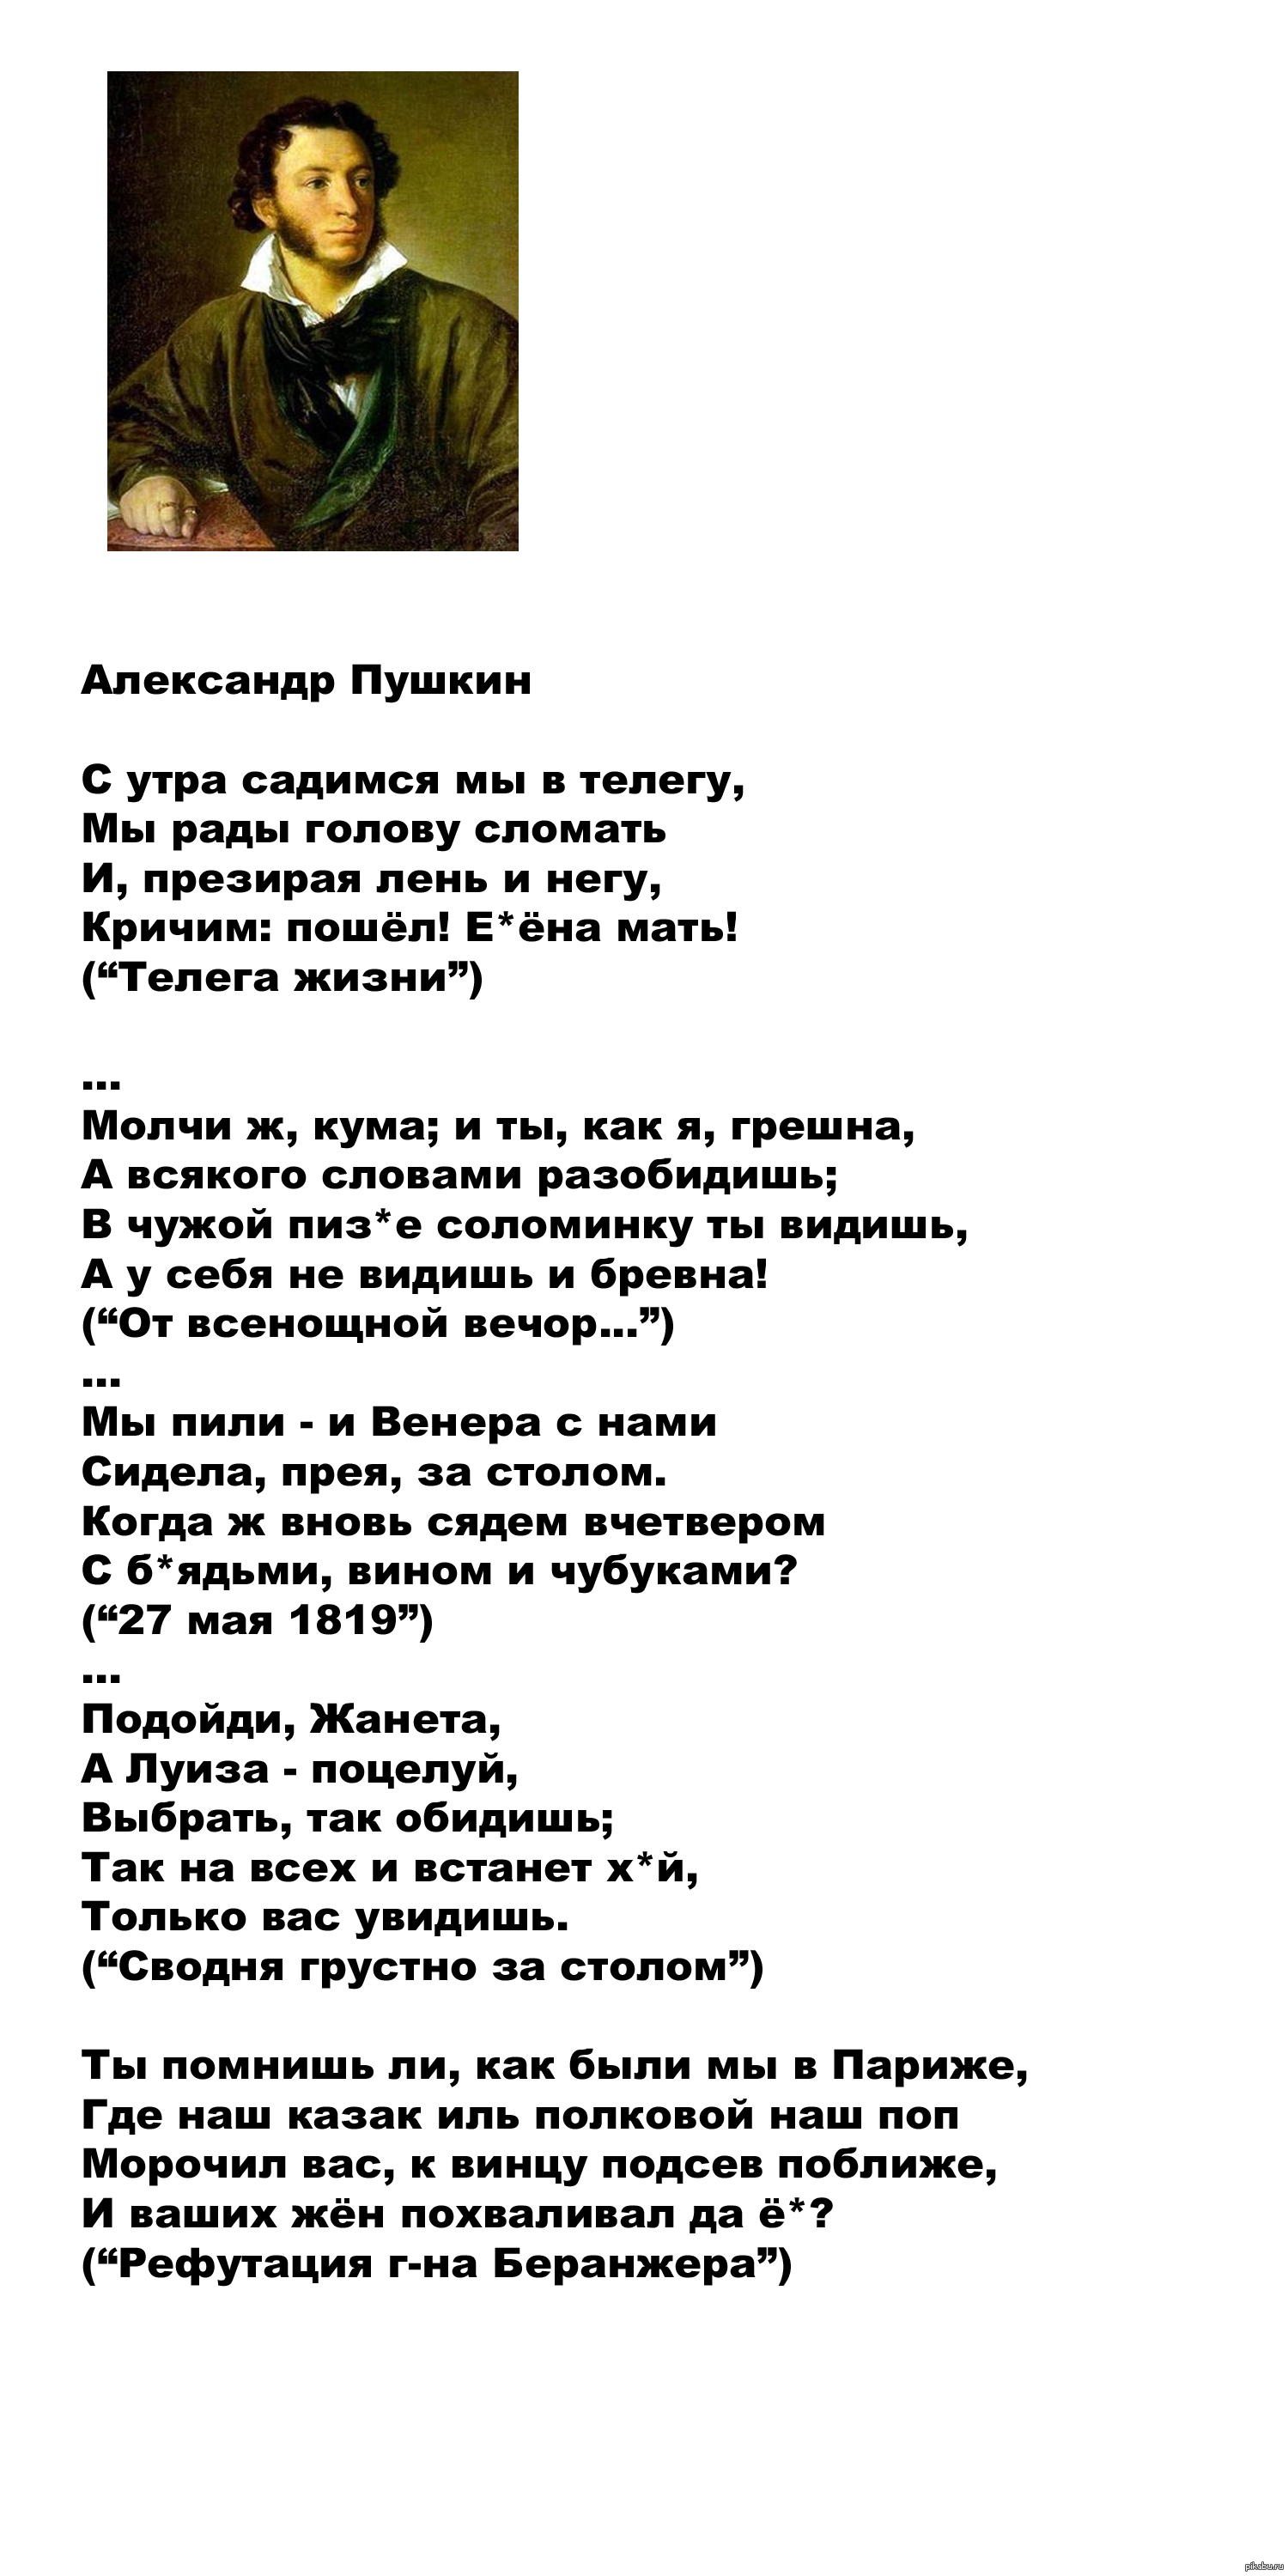 Пушкин матерное стихотворение